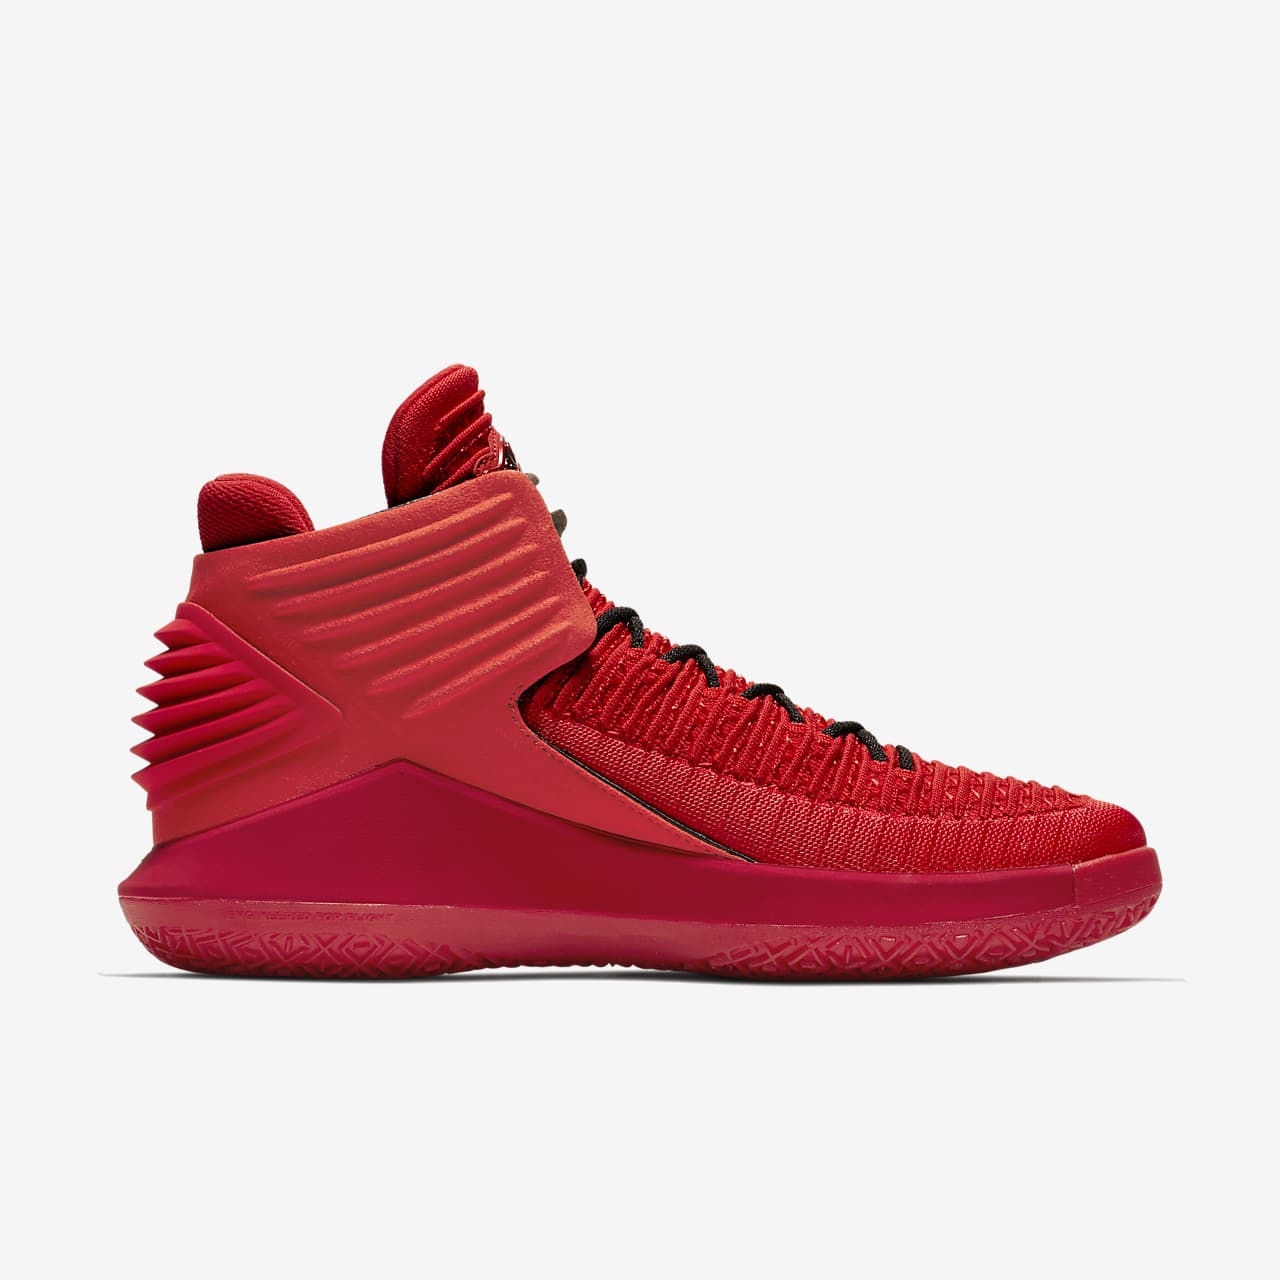 Air Jordan XXXII "Rosso Corsa" Basketball Shoe. ID